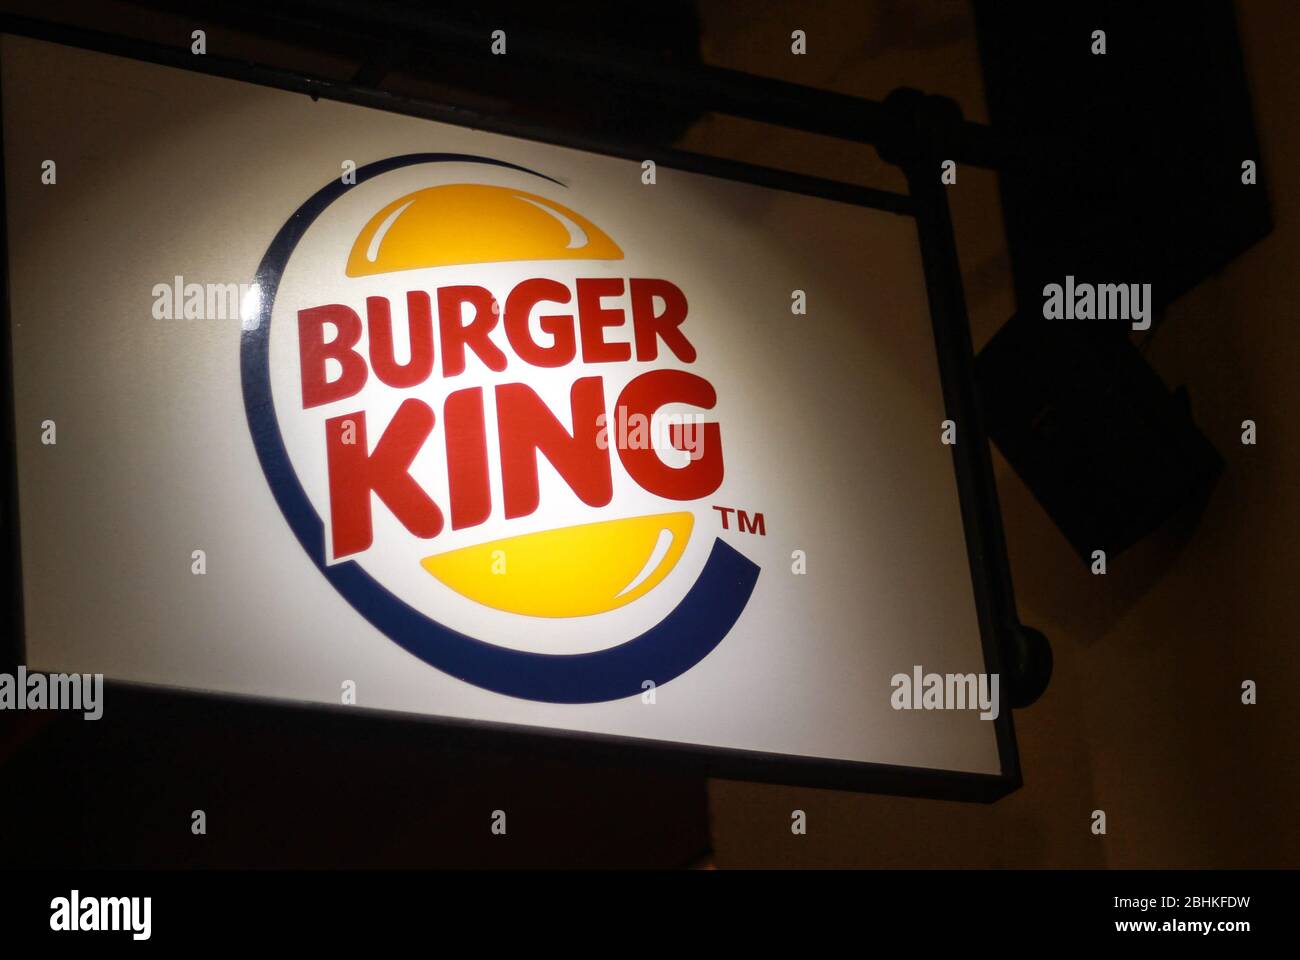 Chain fast-food restaurant Burger King- restaurante de comida rápida de cadena Stock Photo